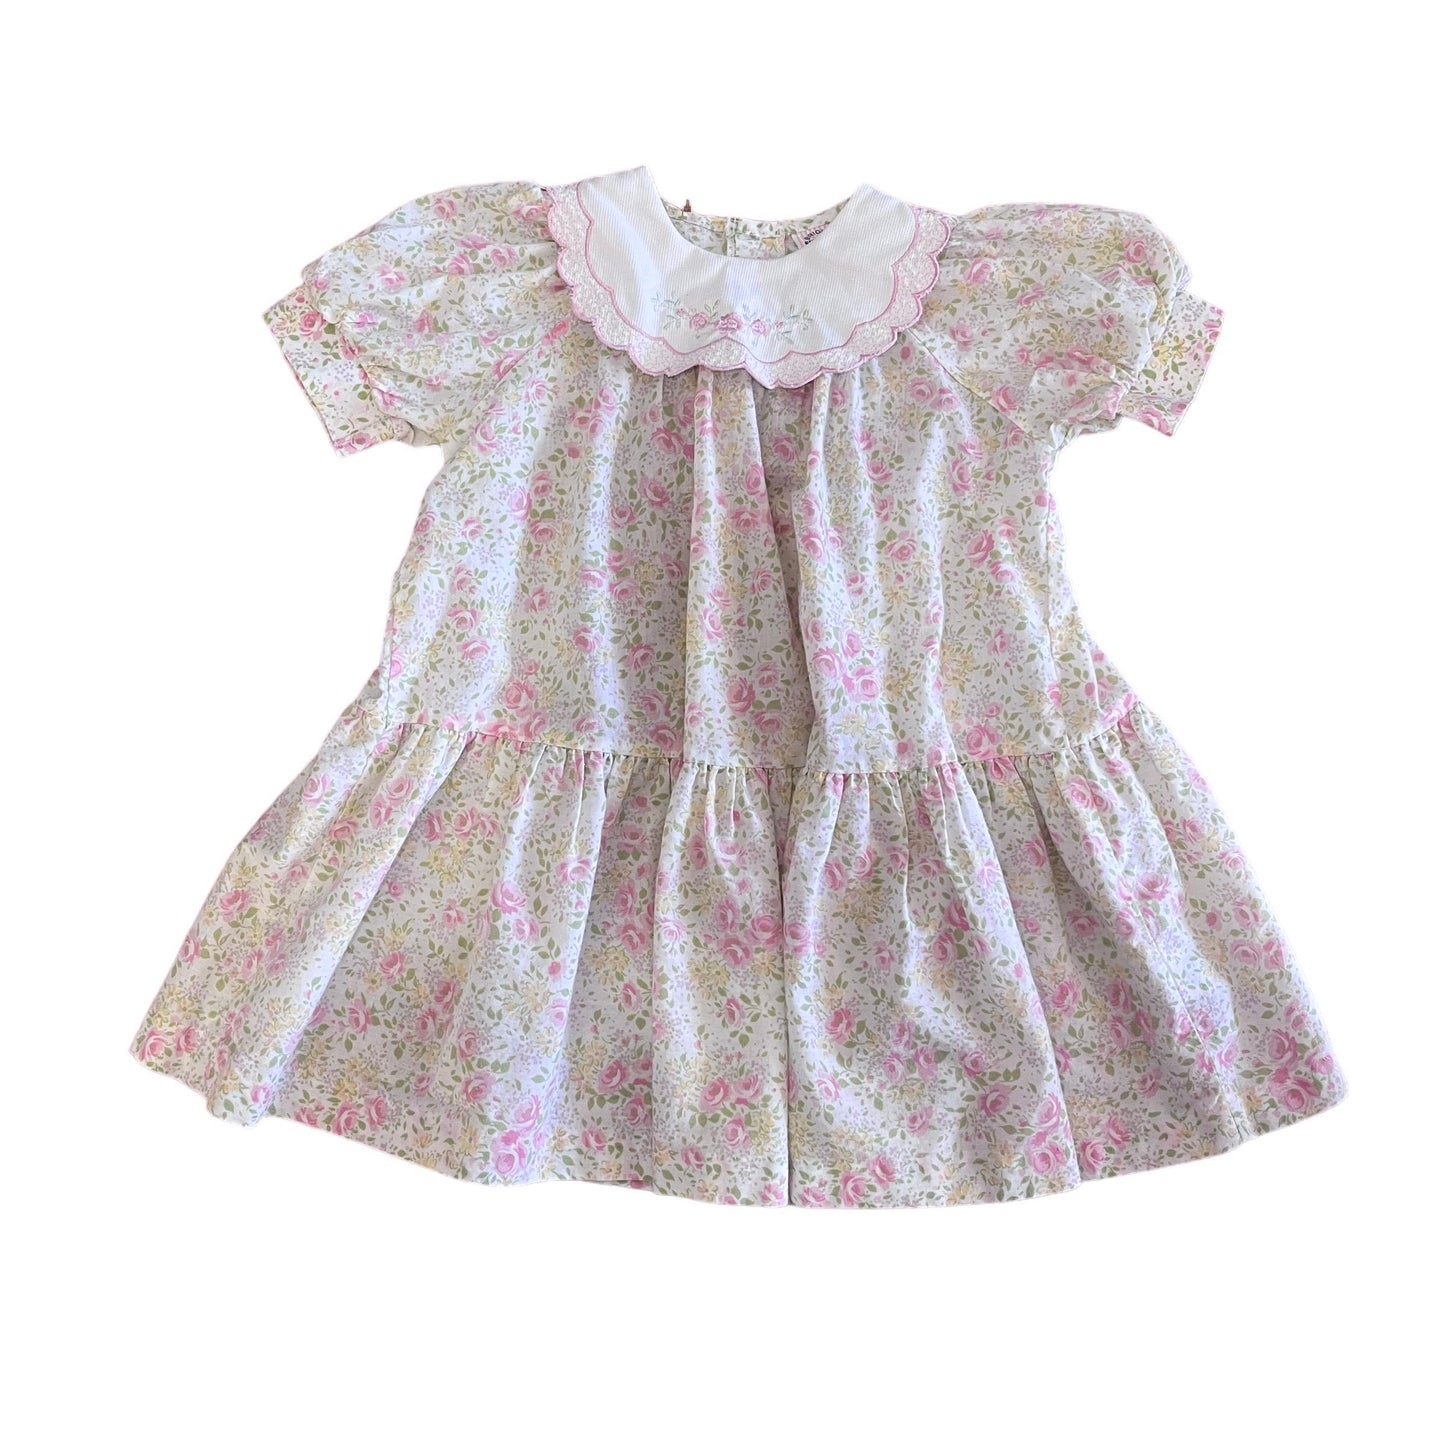 1980s Pastel Floral Dress 2-3Y